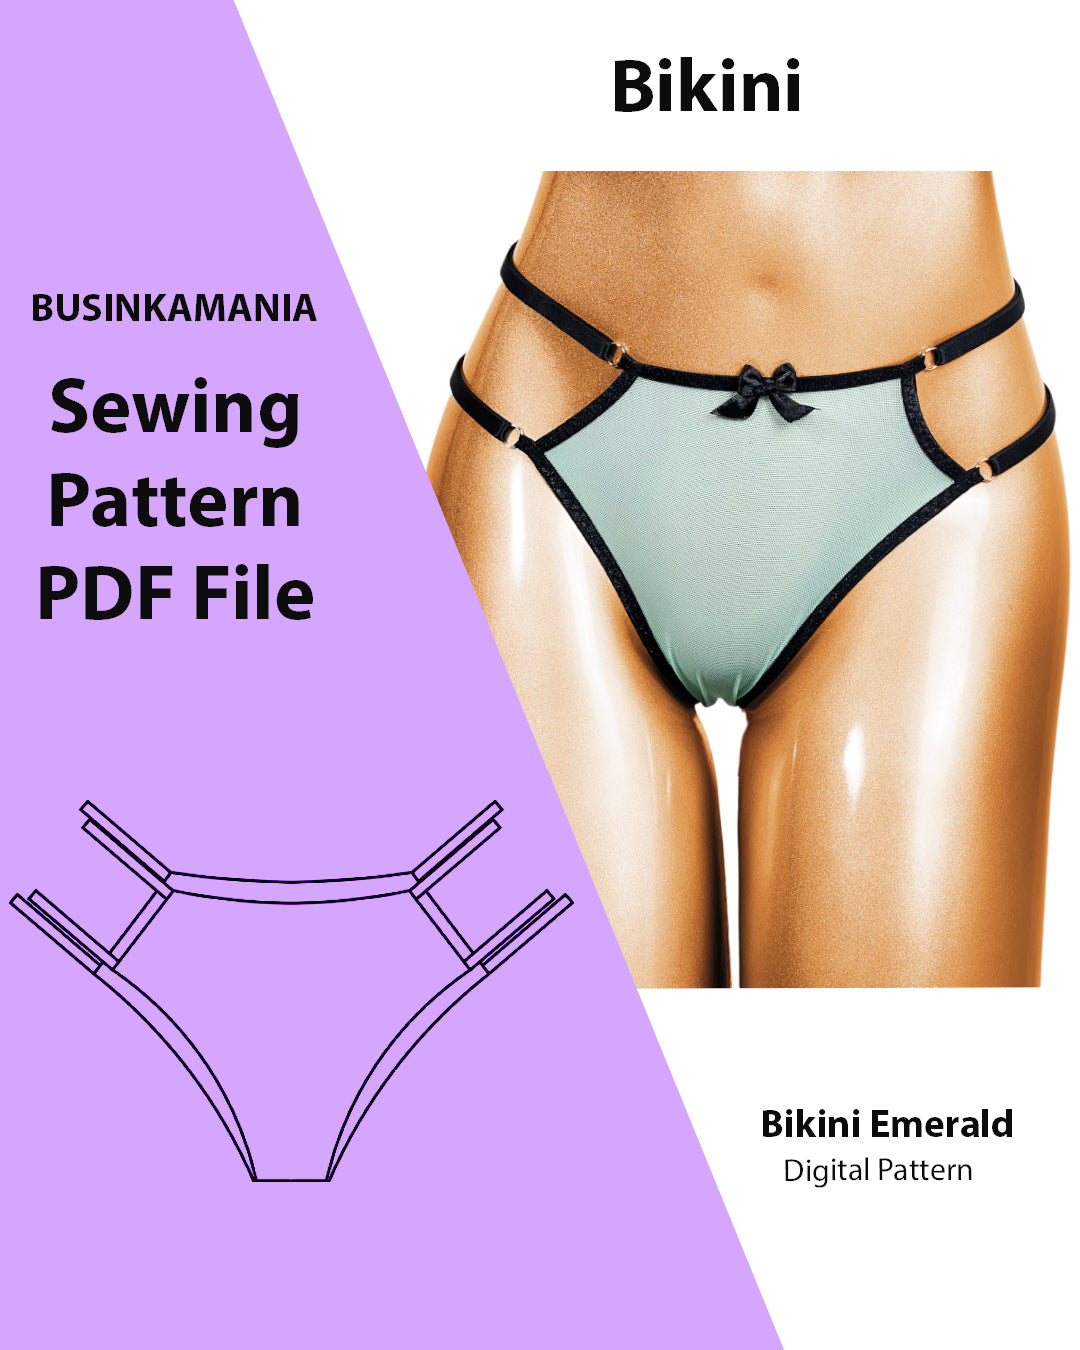 Bikini Emerald Sewing Pattern